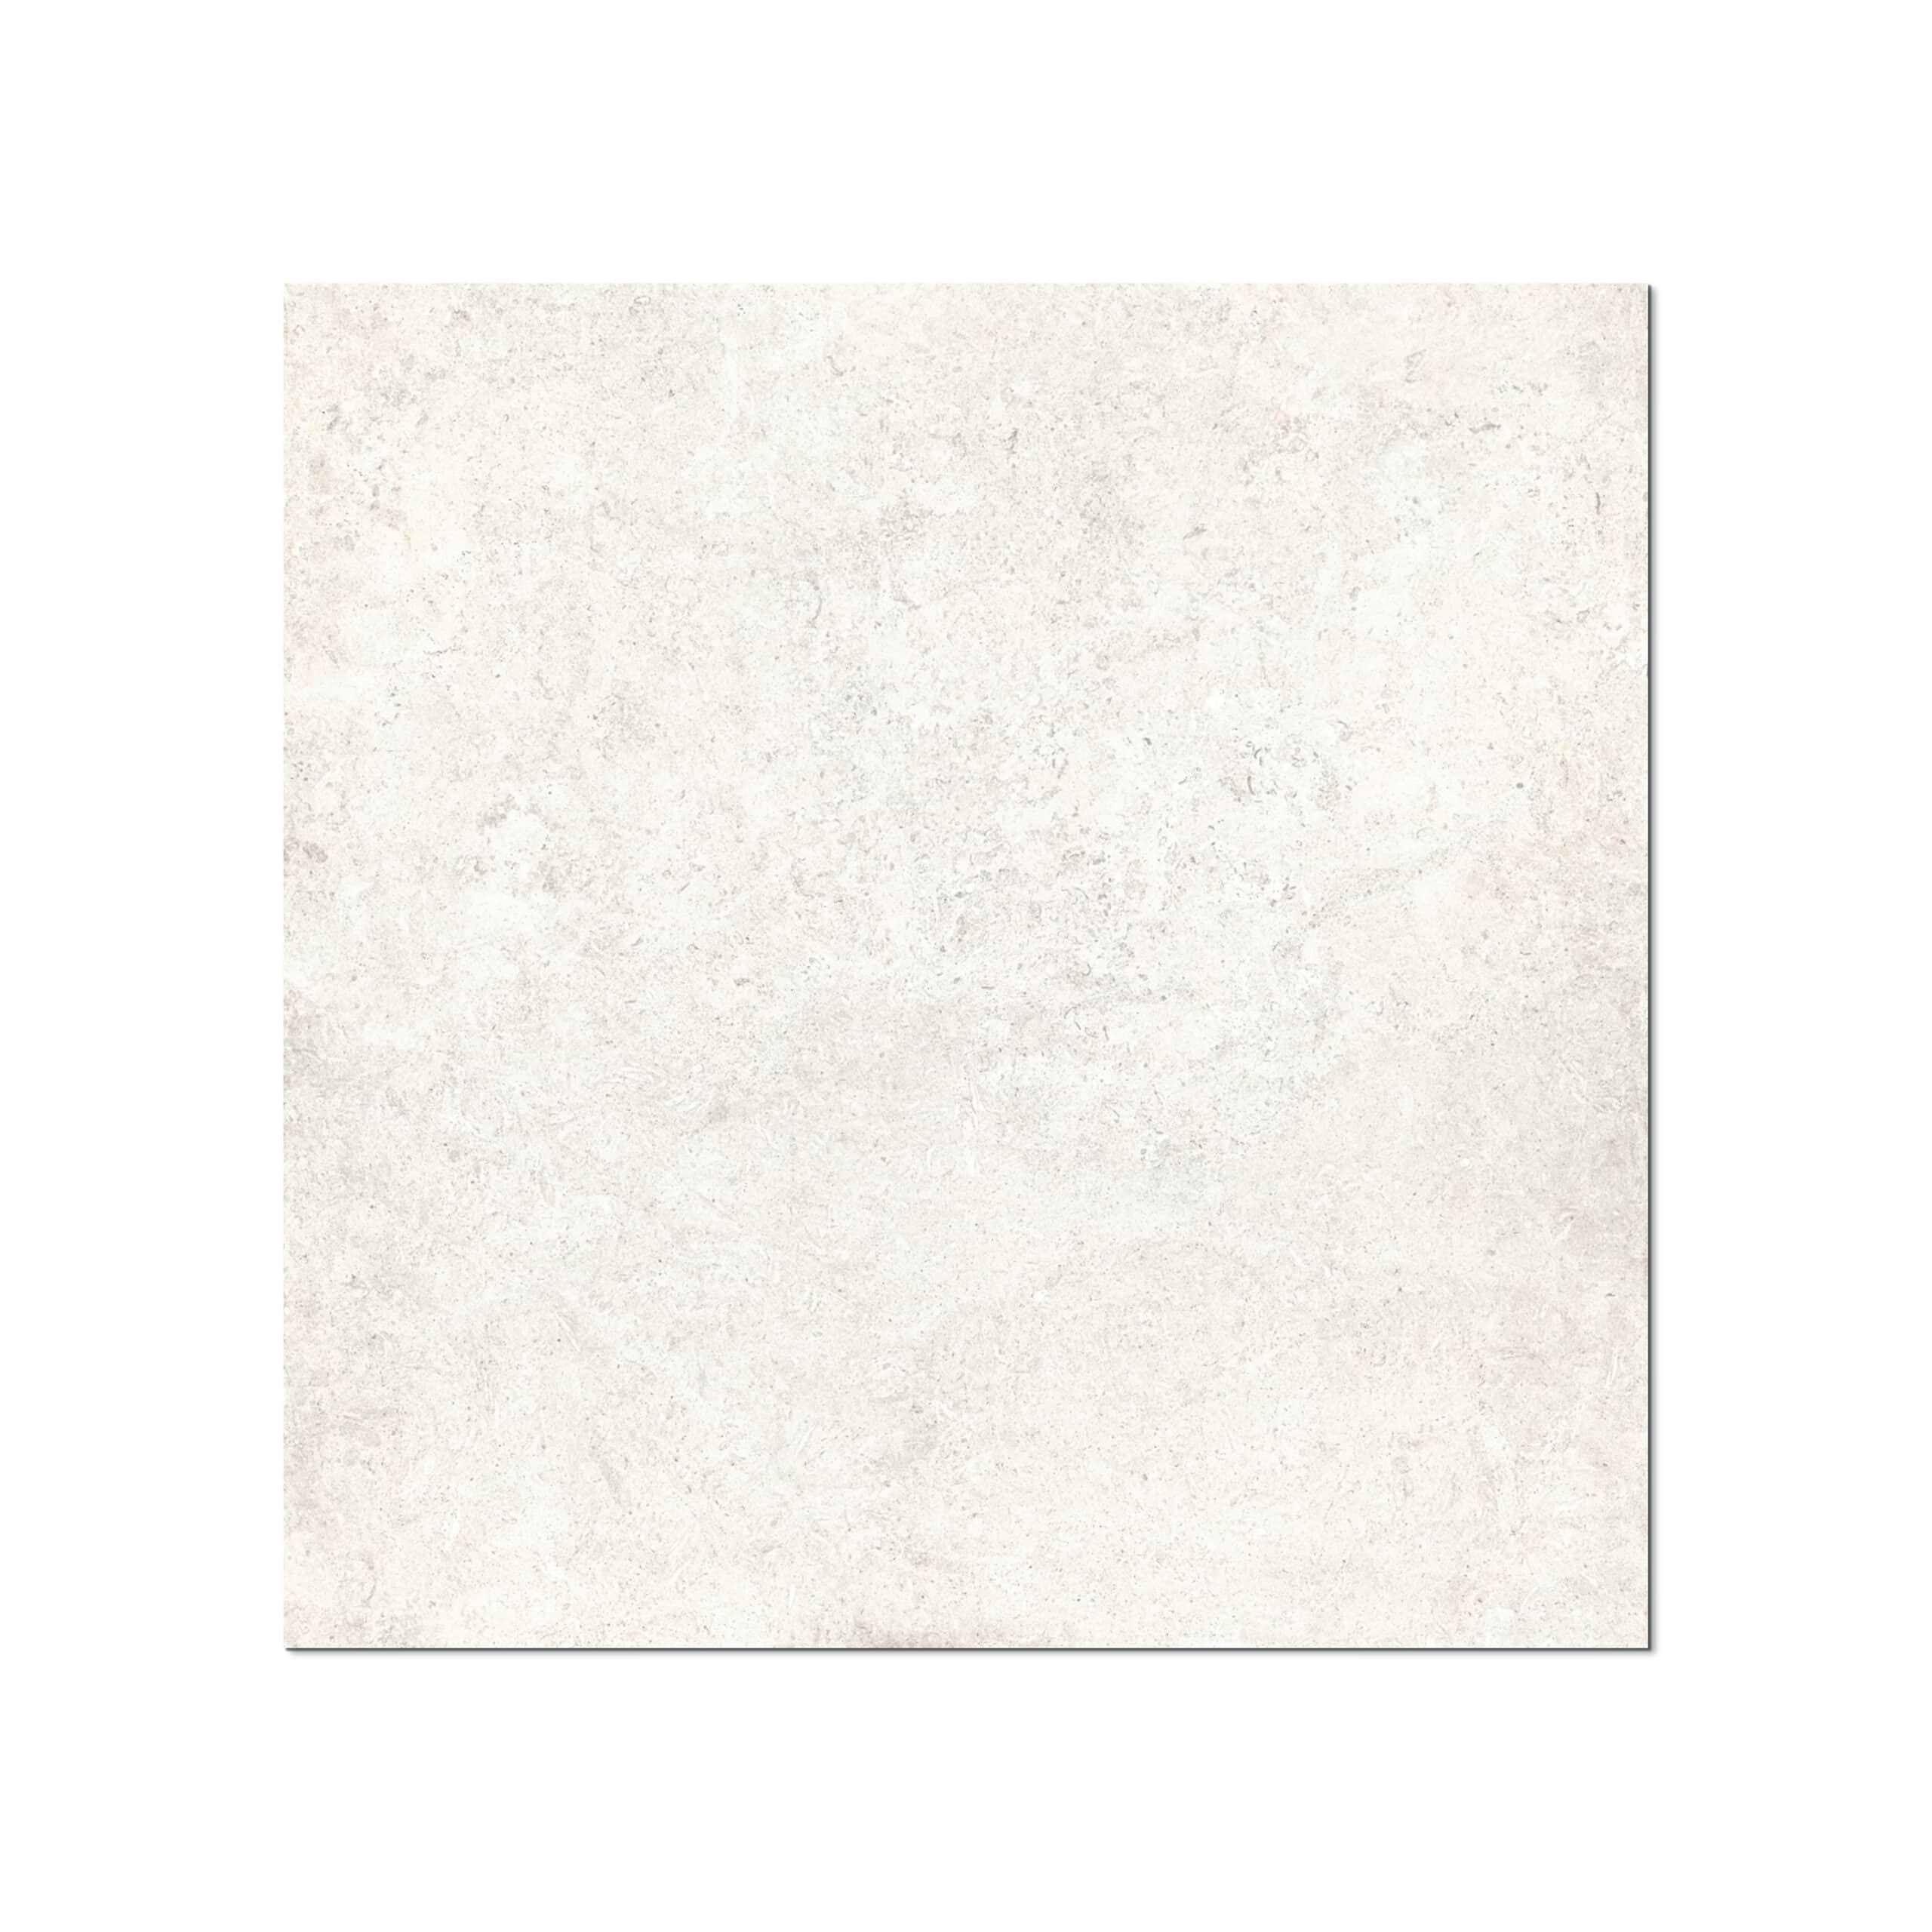 Onda White 48x48 Matte Porcelain Tile 01